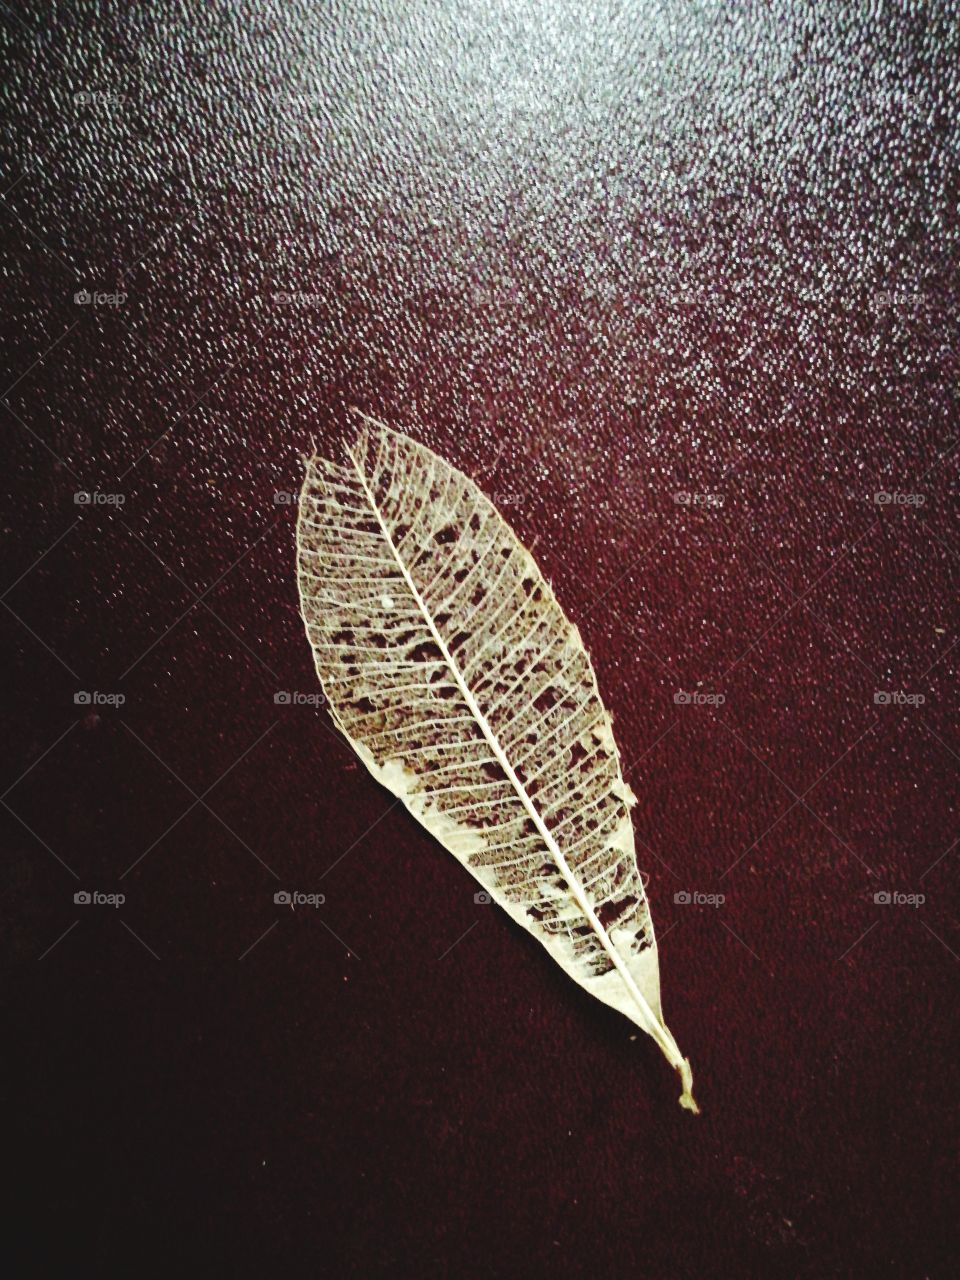 Leaf with veins.